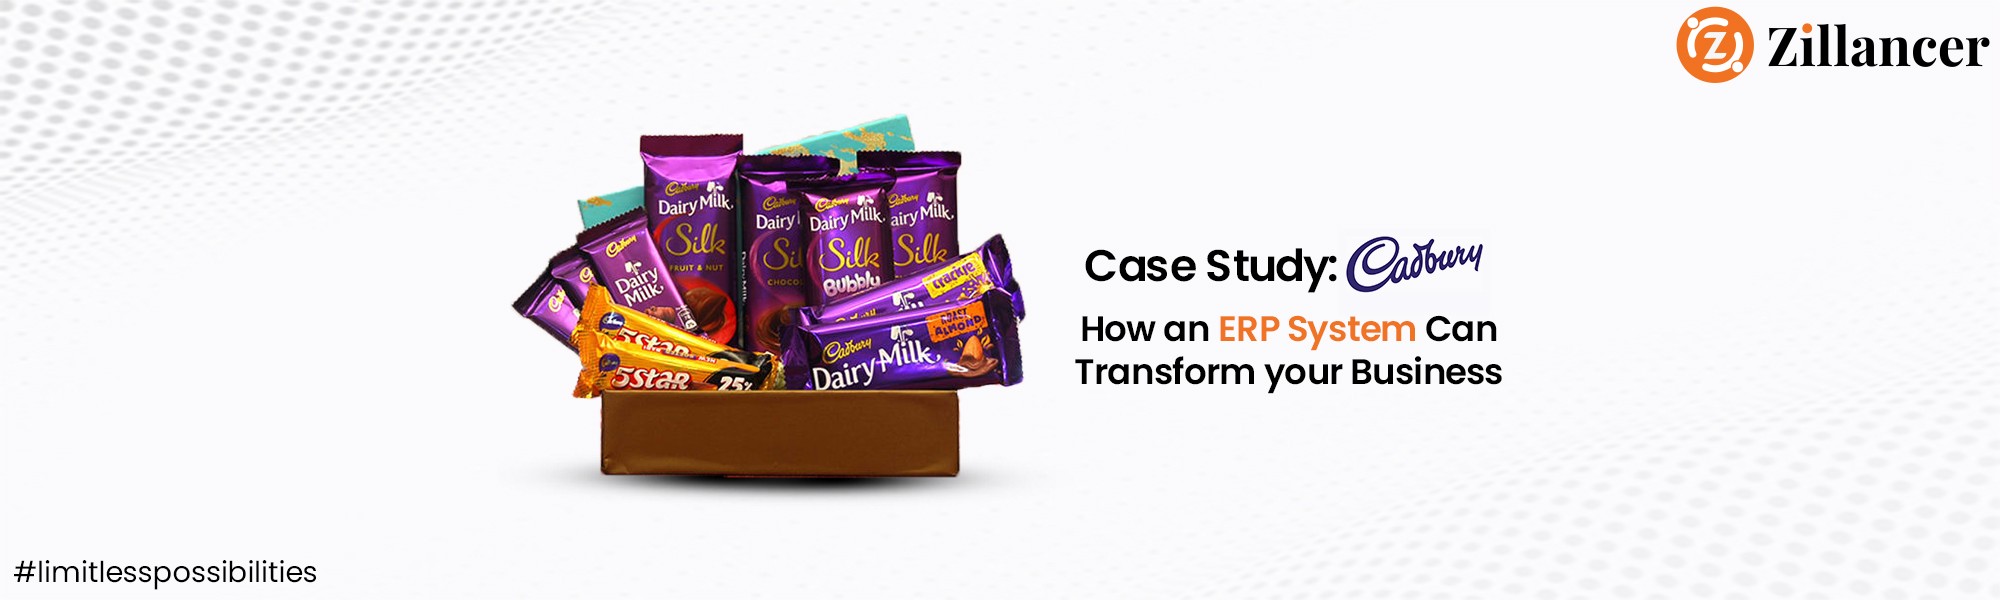 erp case study on cadbury